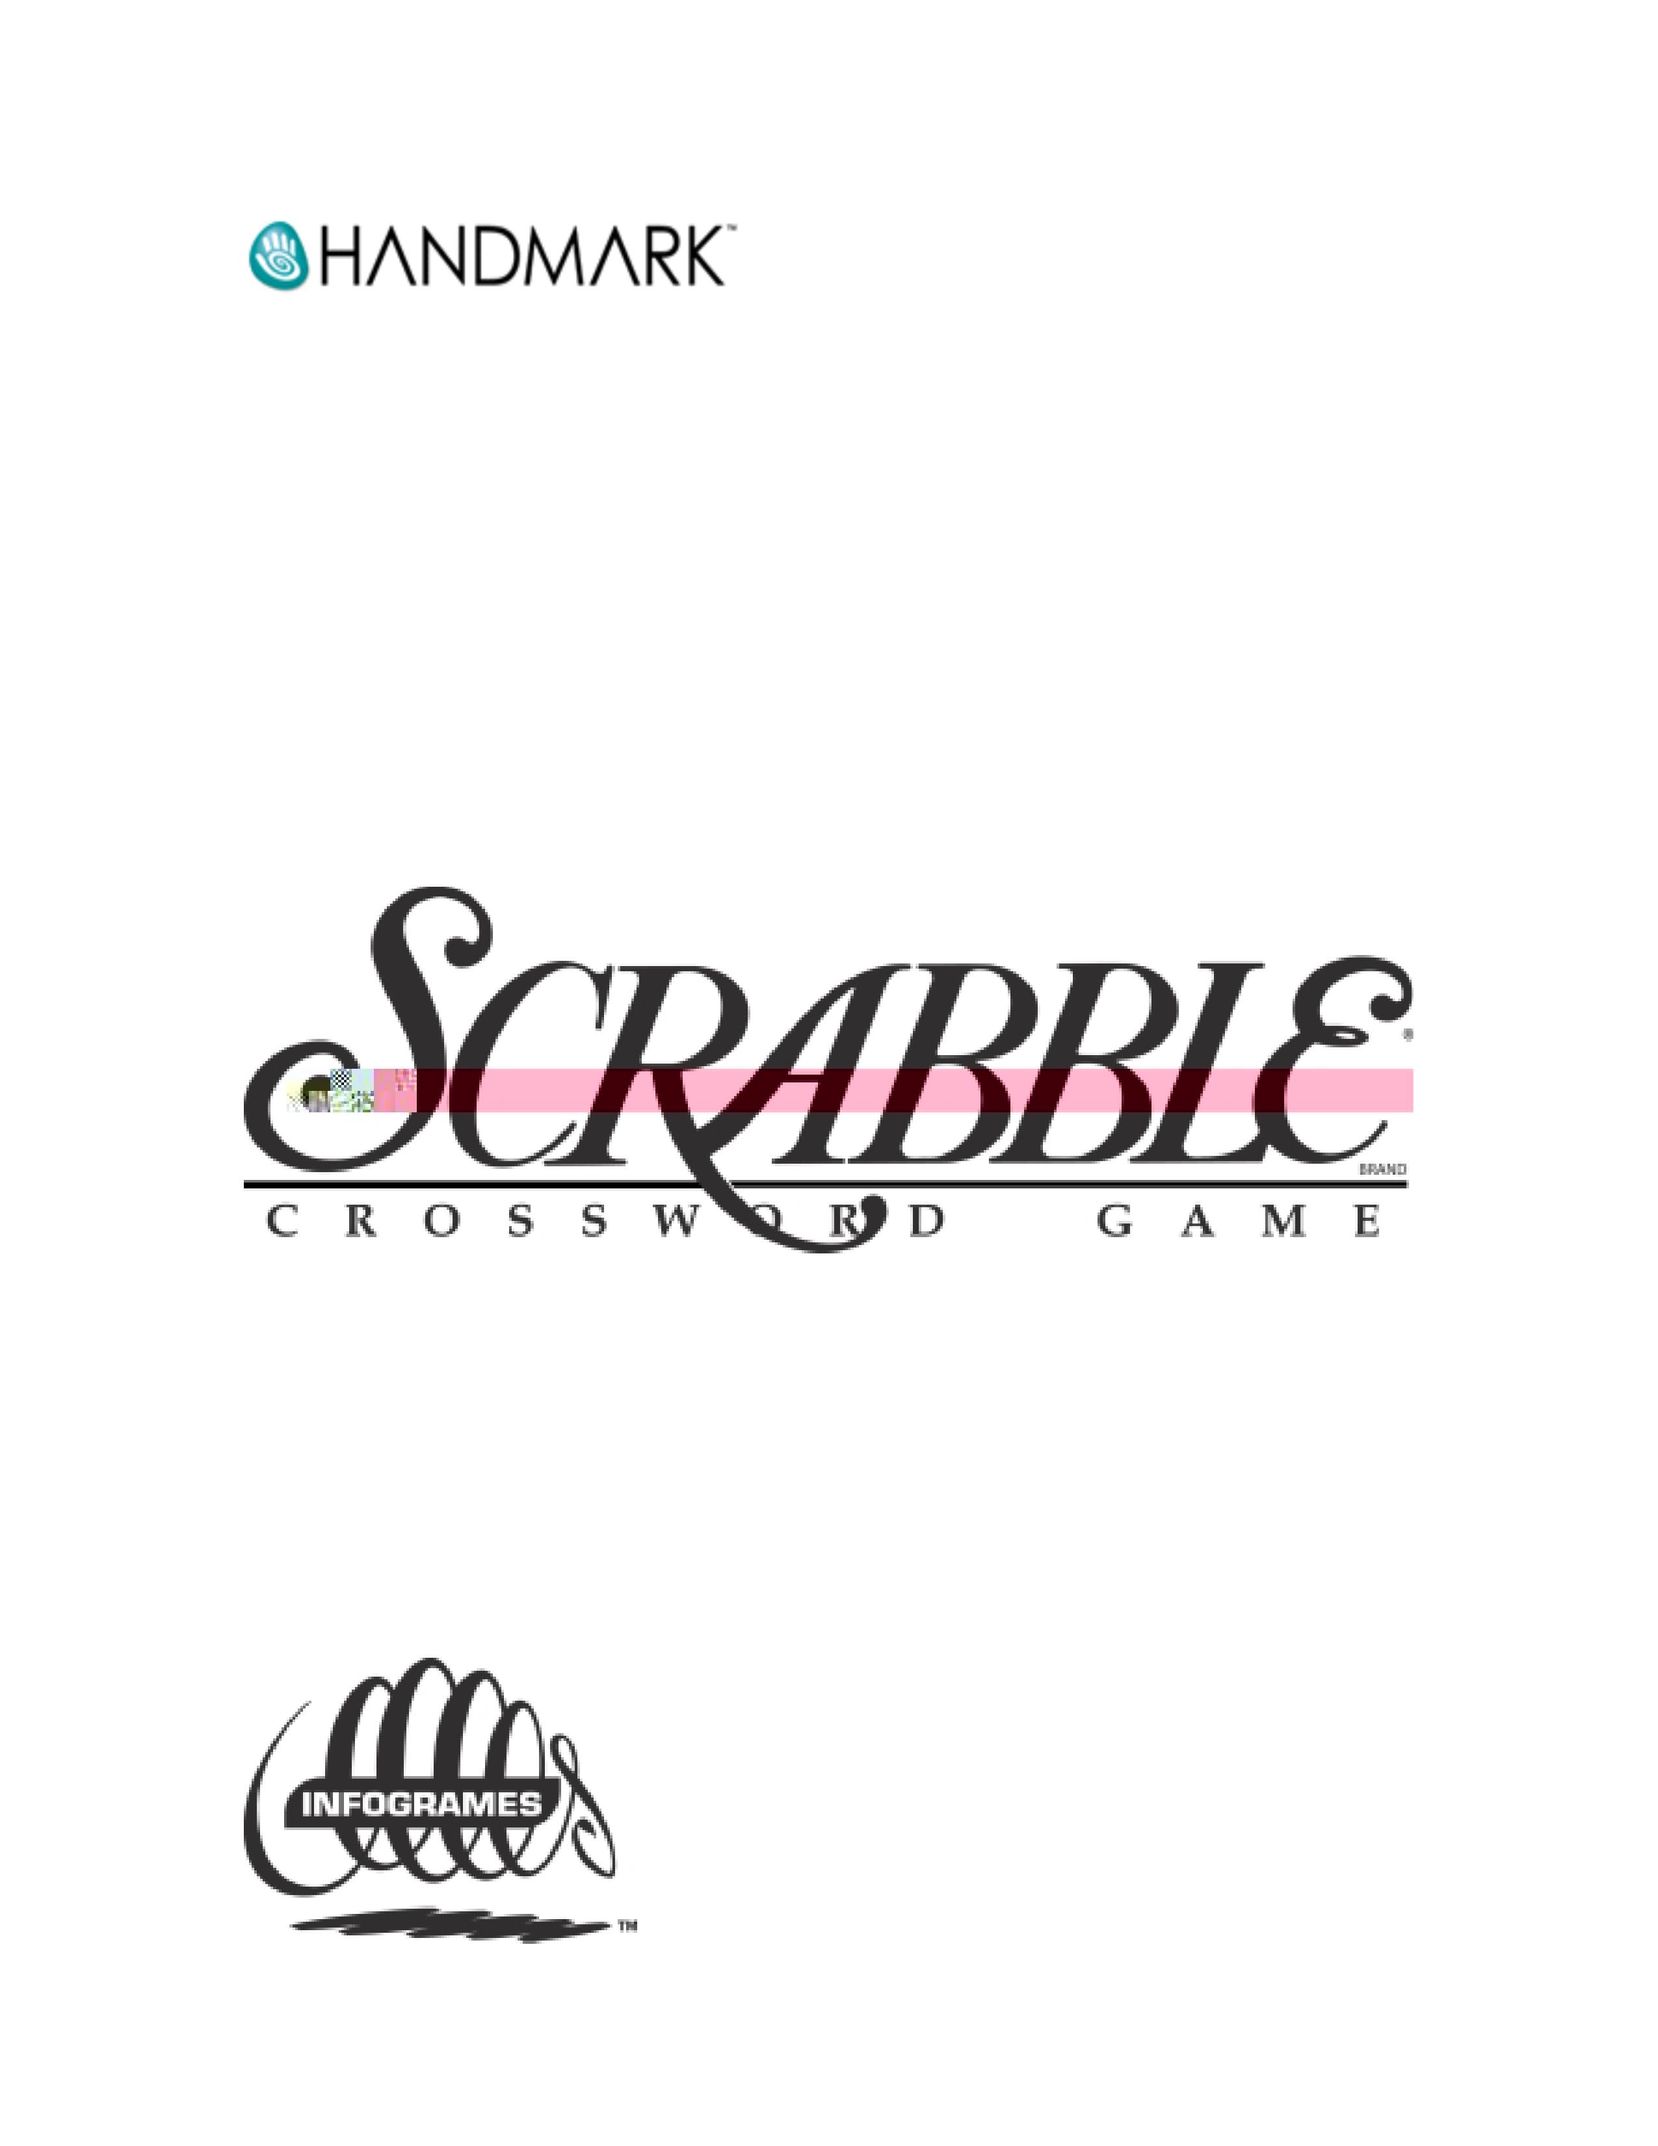 Handmark Scrabble Crossword Game Games User Manual